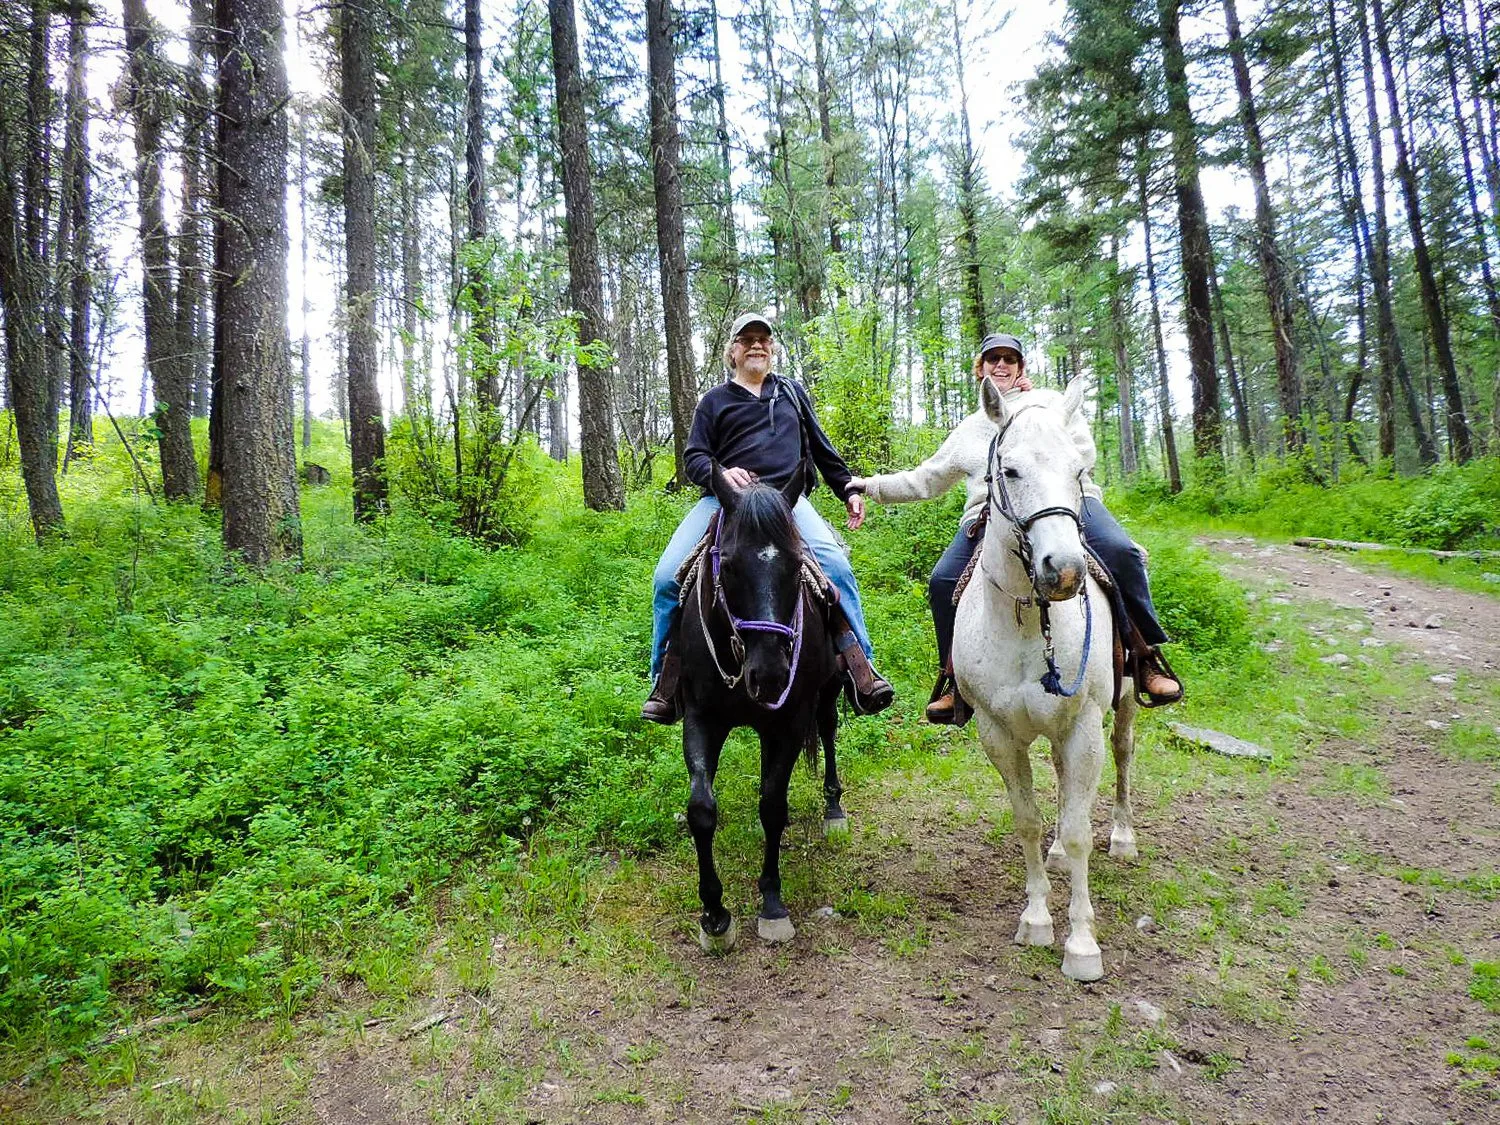 A horseback ride through the woods in Montana.